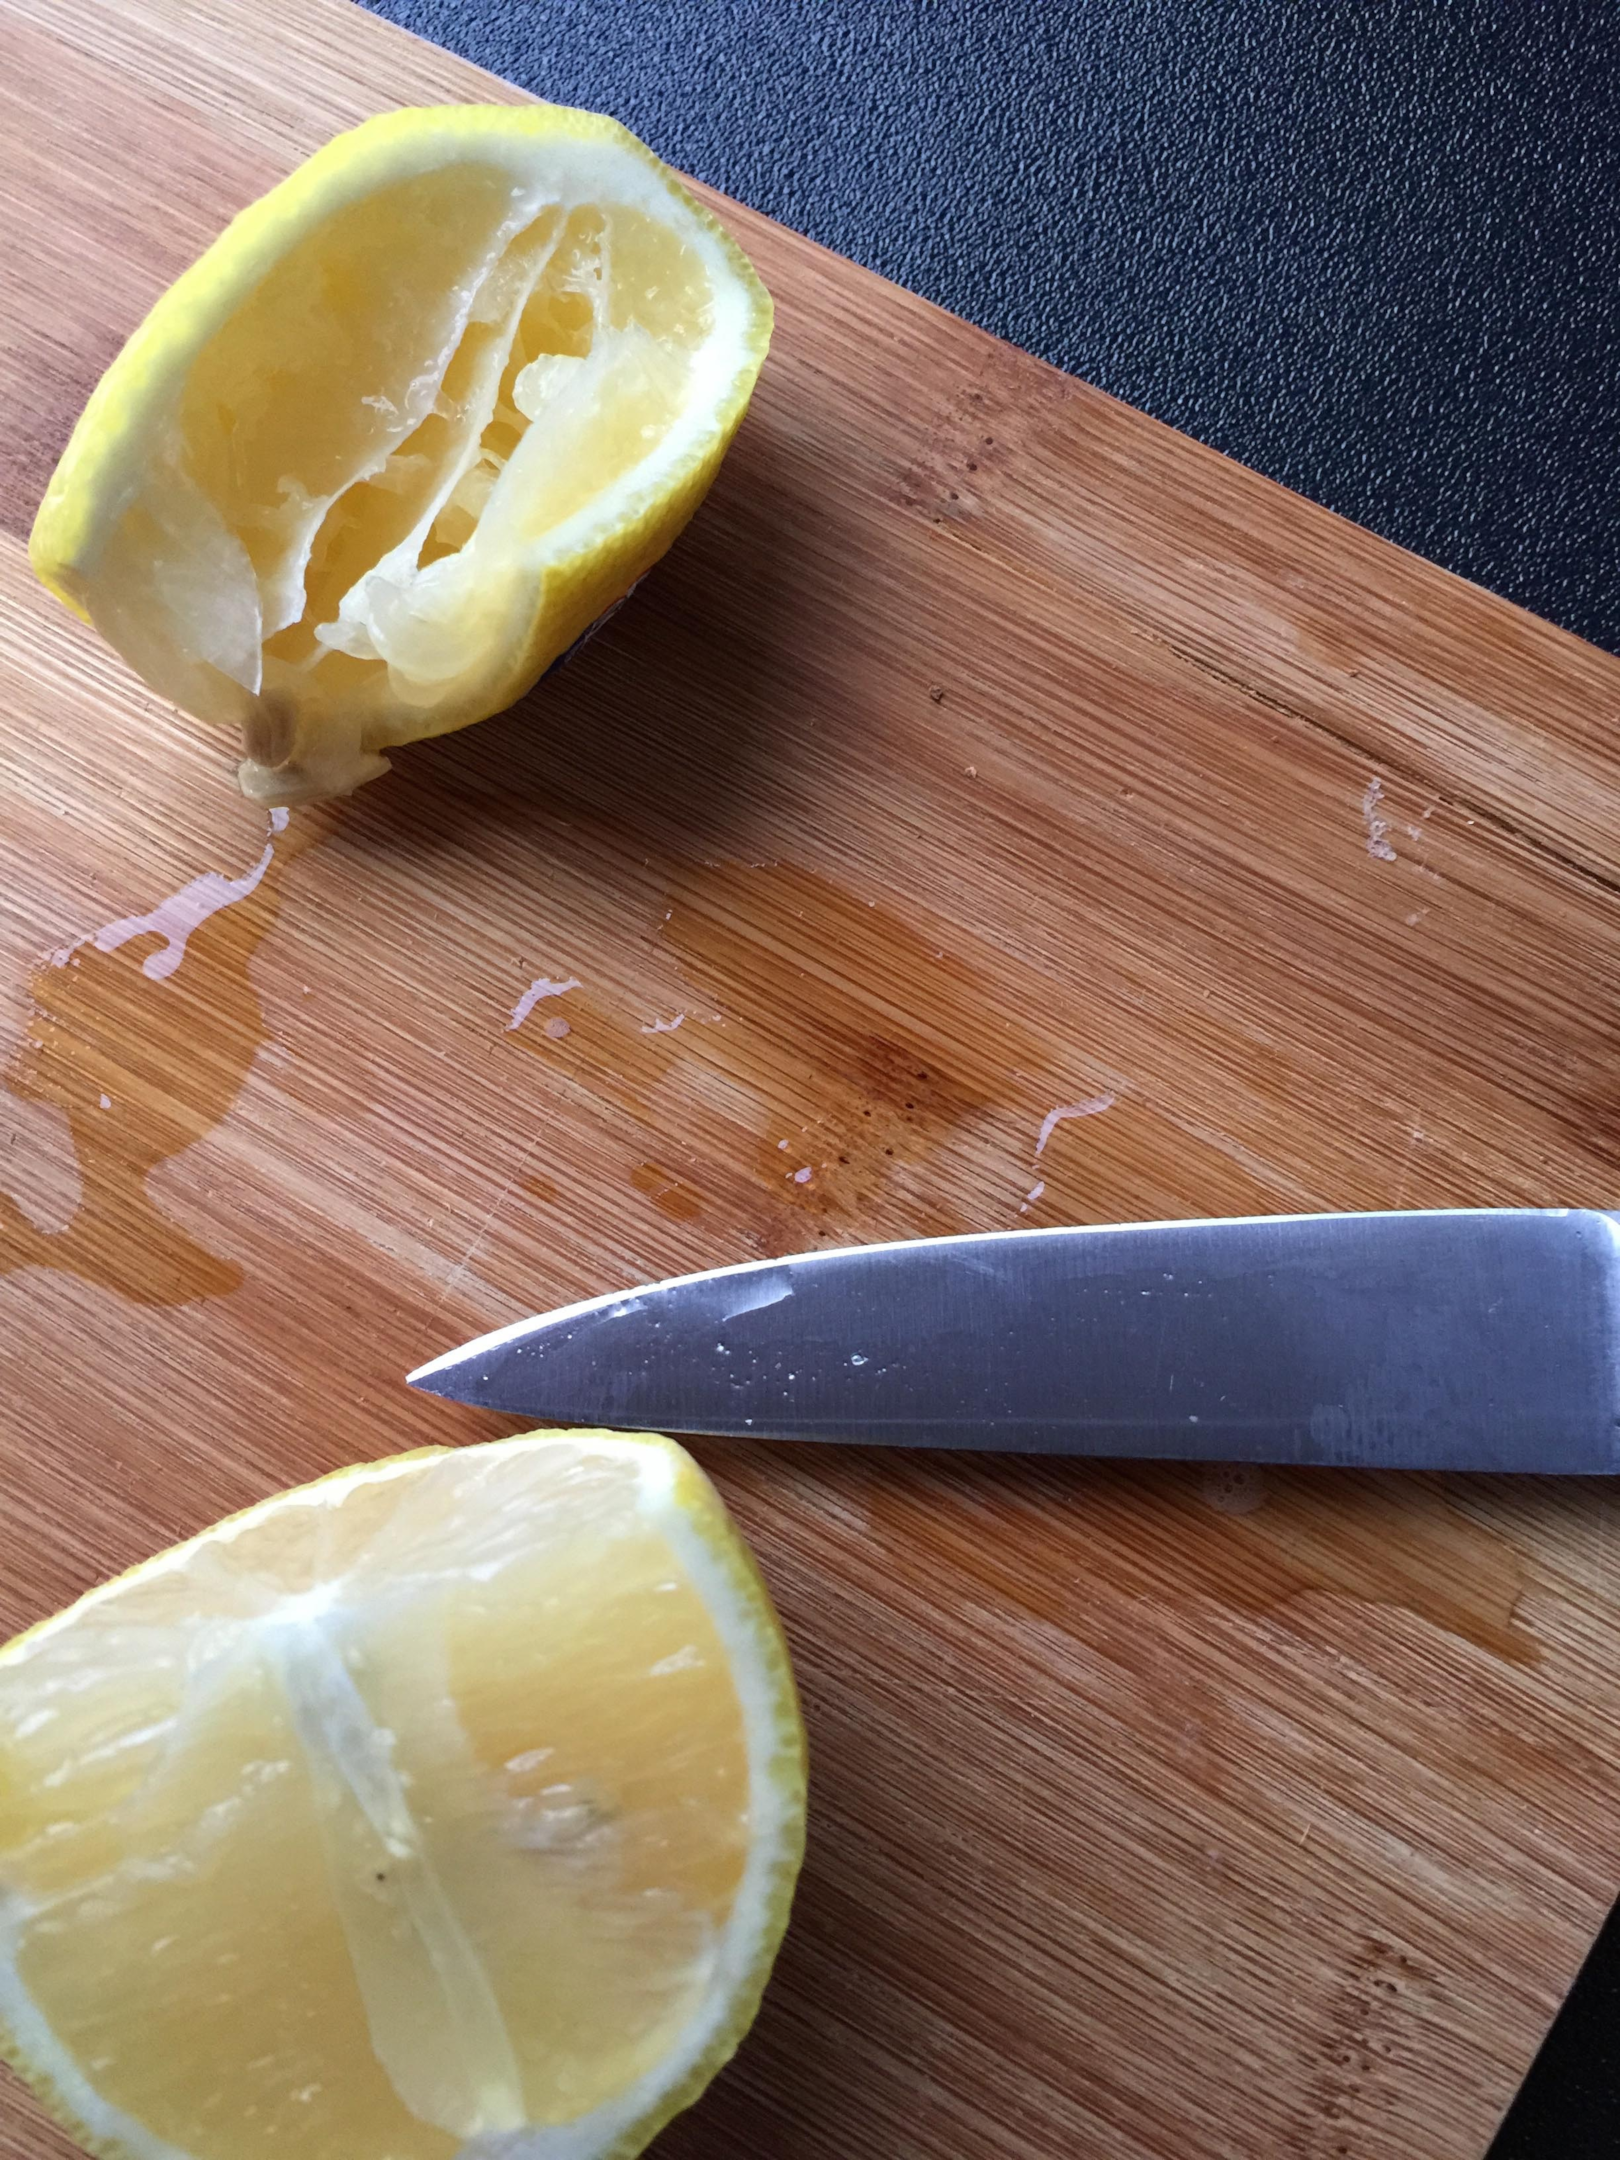 lemon to clean cutting board, cutting board maintenance